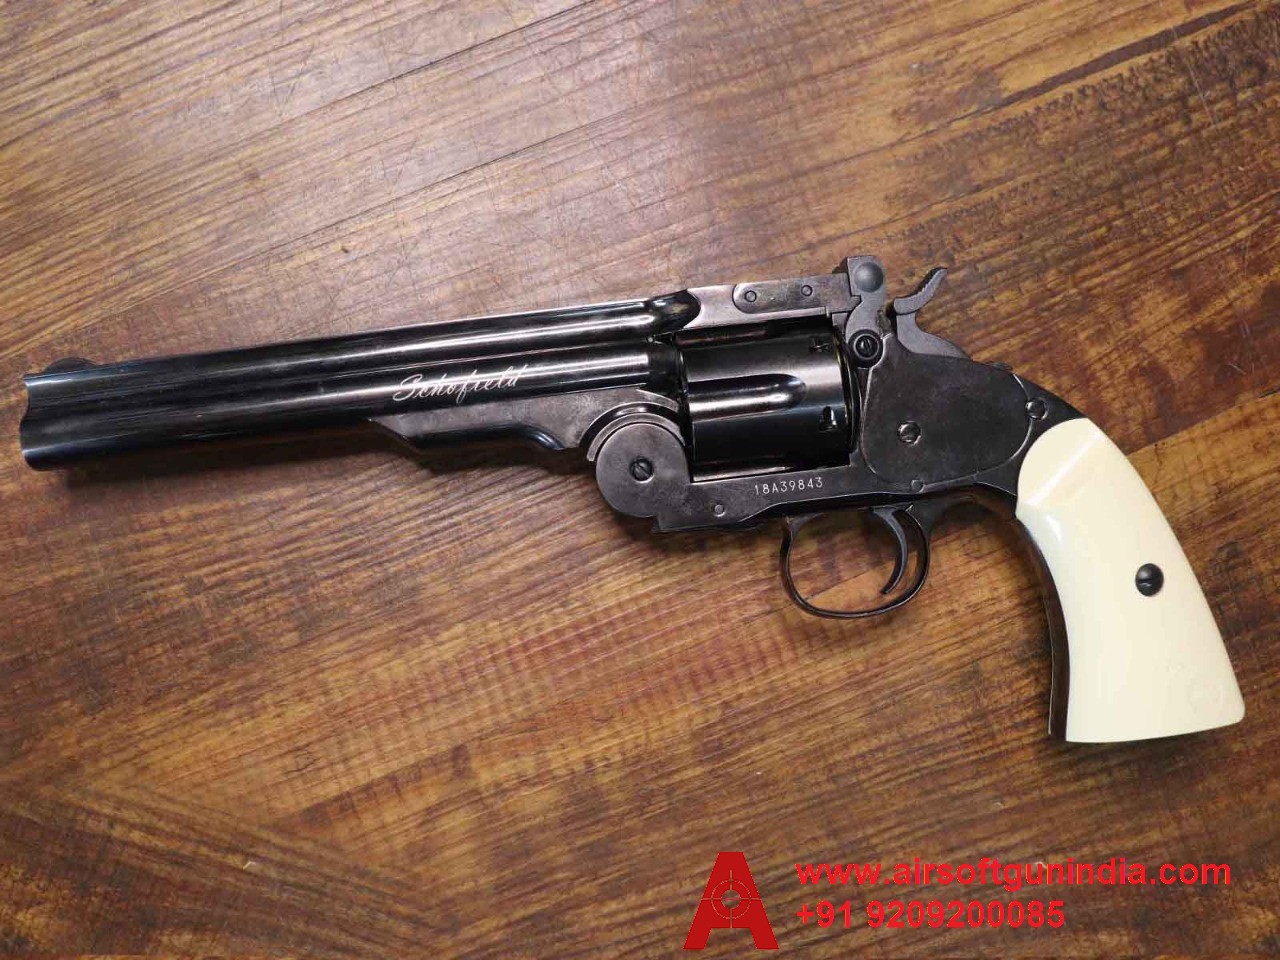 Schofield 6” Pellet Revolver black by Airsoft gun india - Airsoft